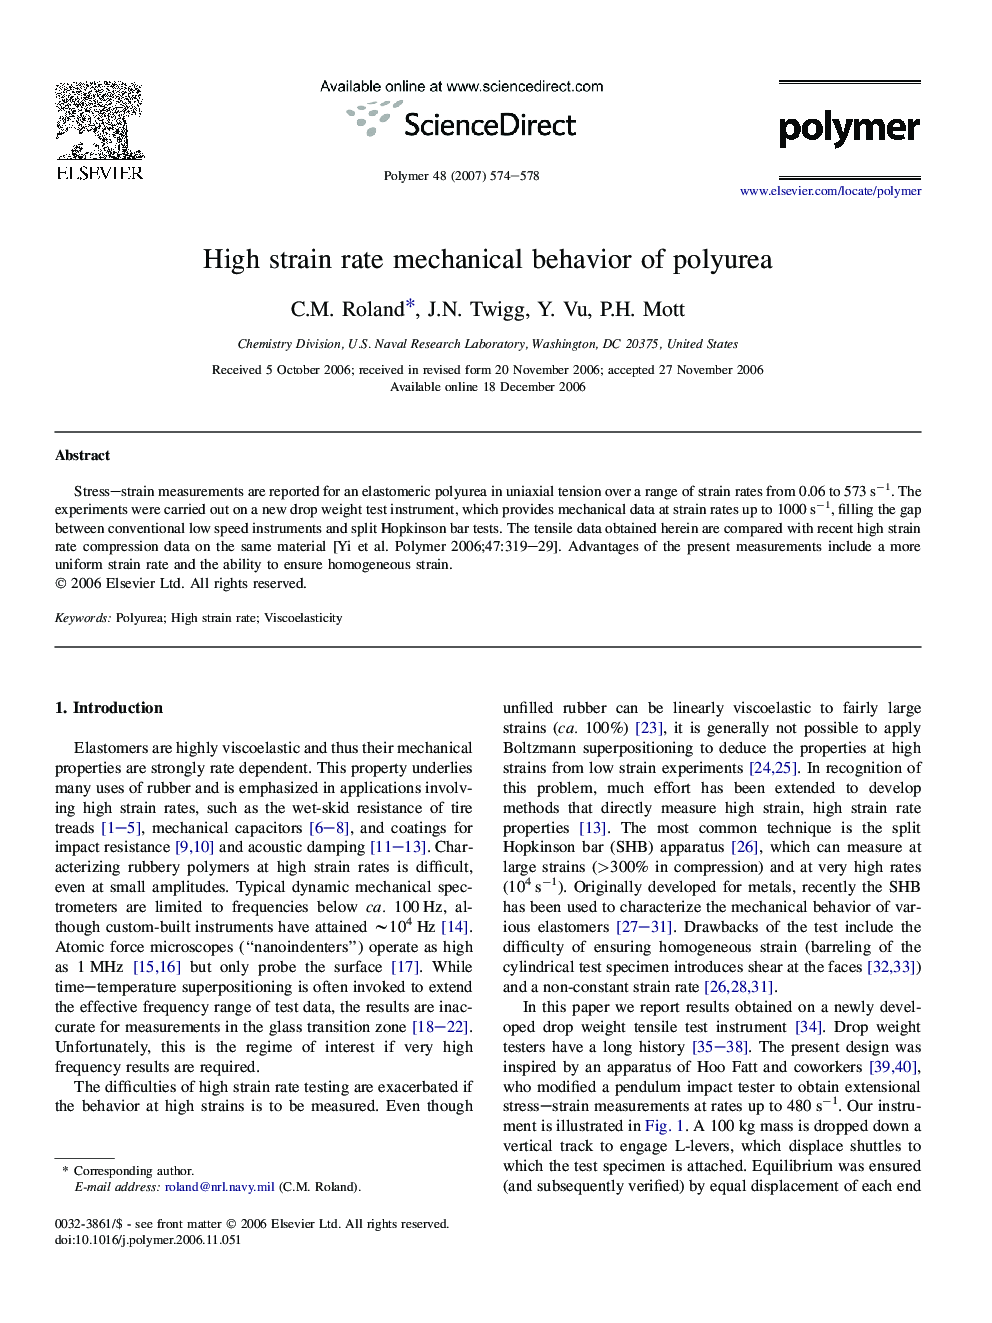 High strain rate mechanical behavior of polyurea